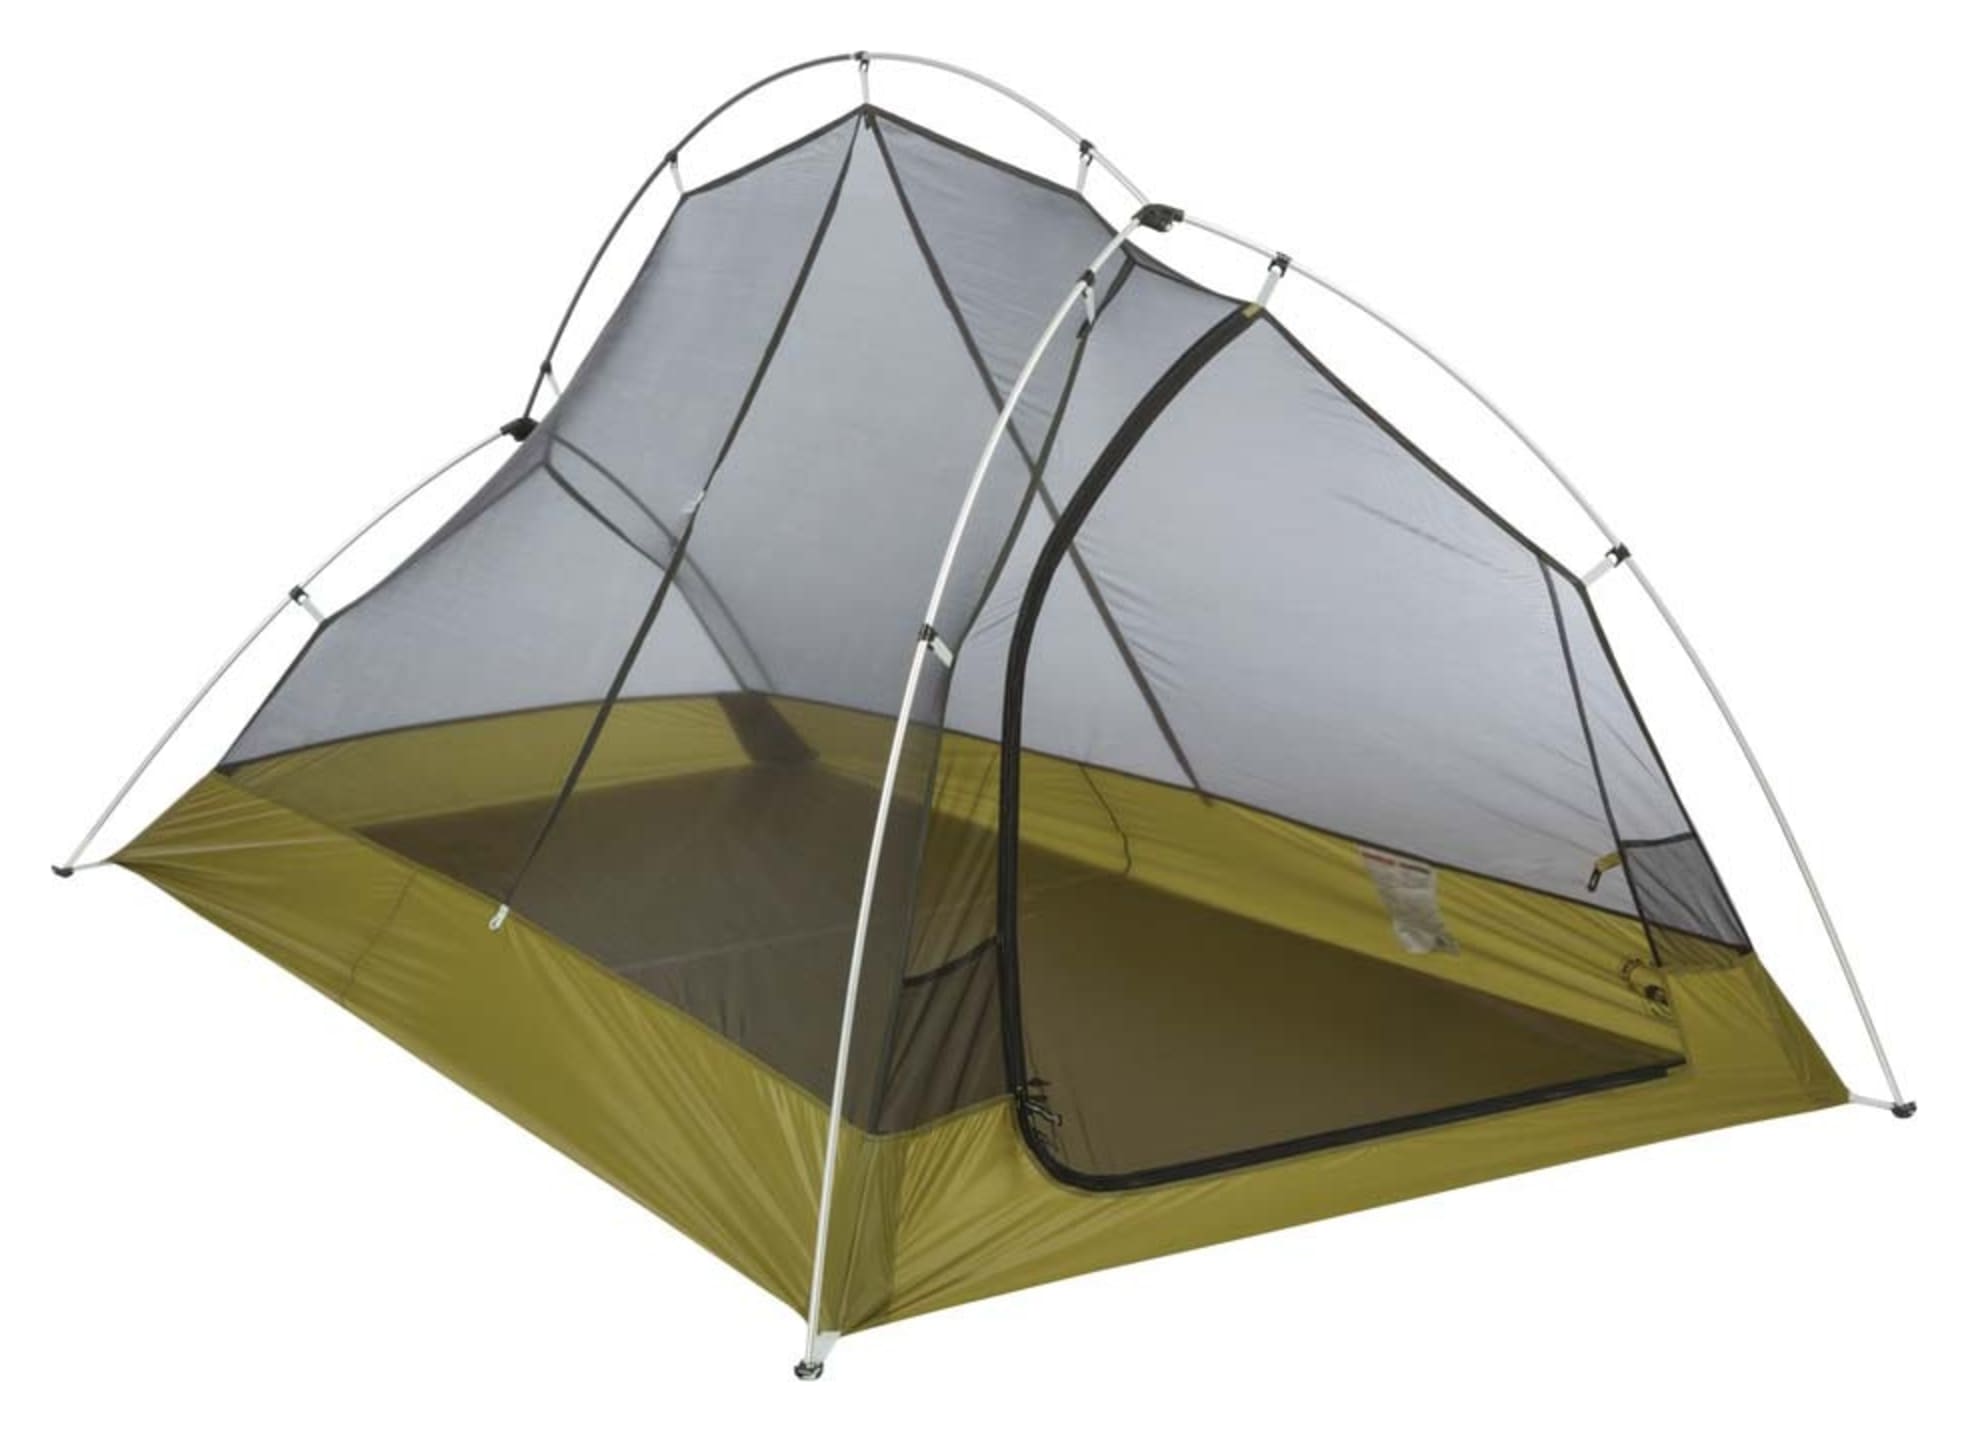 Aliexpress.com : Buy 1 x Outdoor Camping Triangular Tent